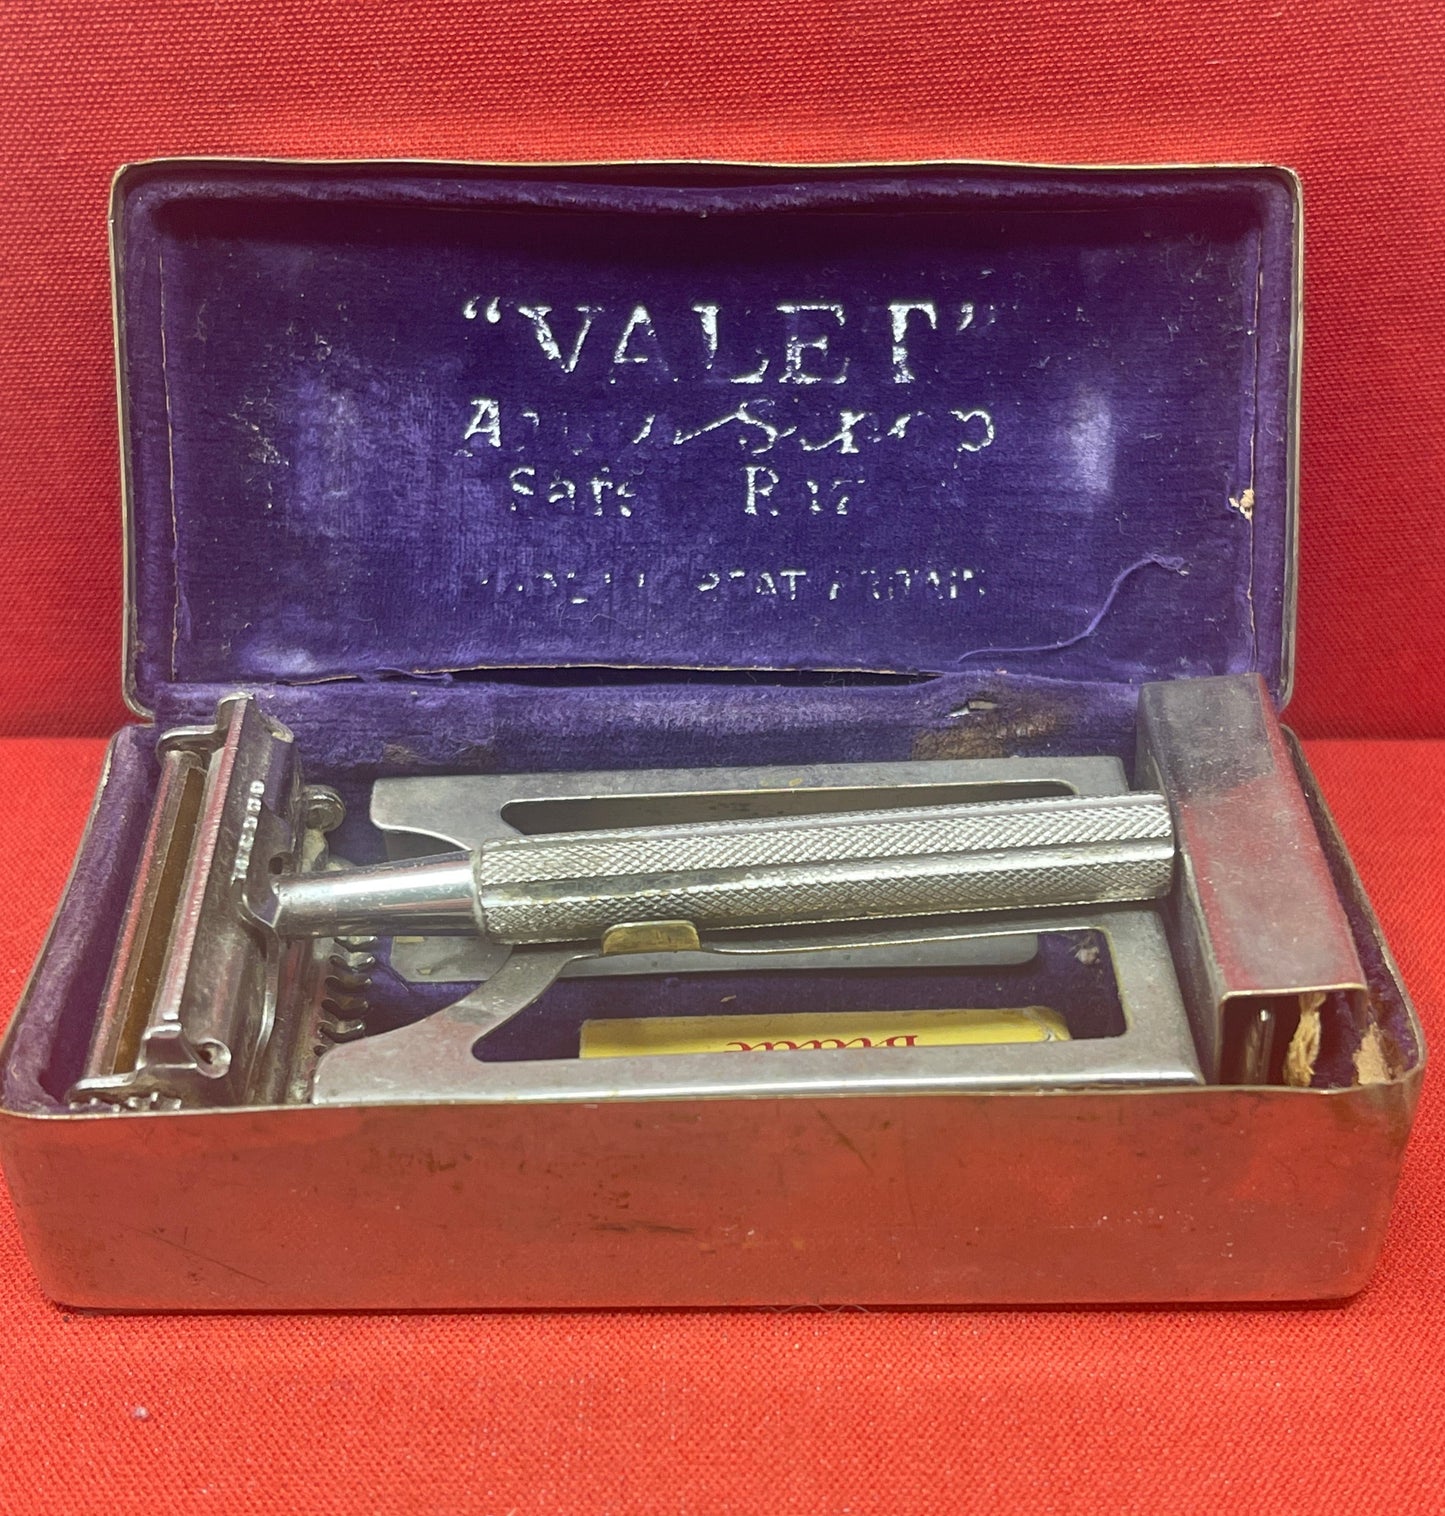 Vintage Valet Auto-Strop Razor with blades